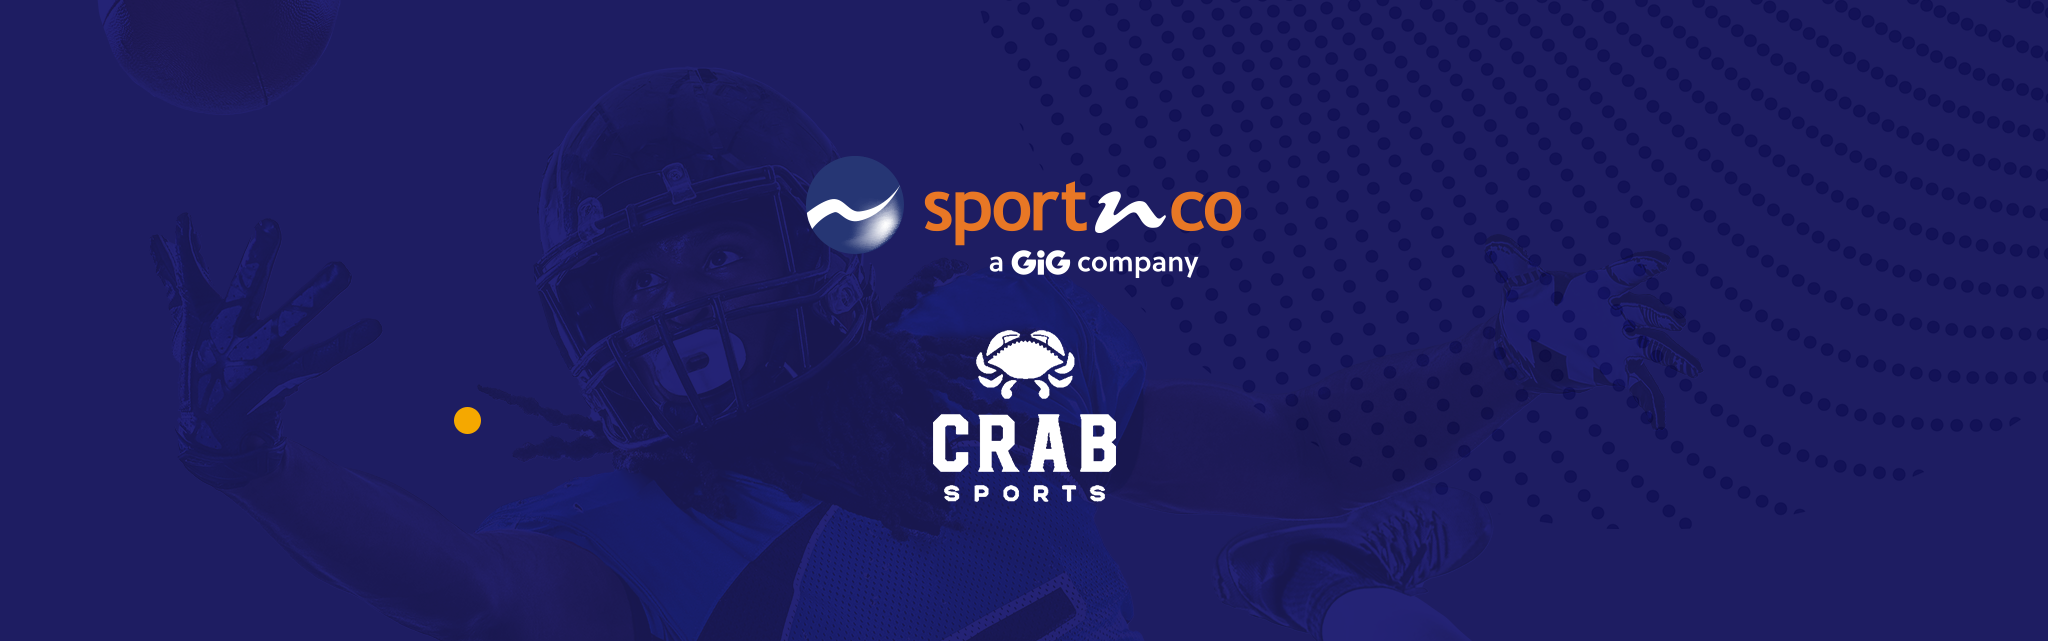 GiG_PR_crab_sports